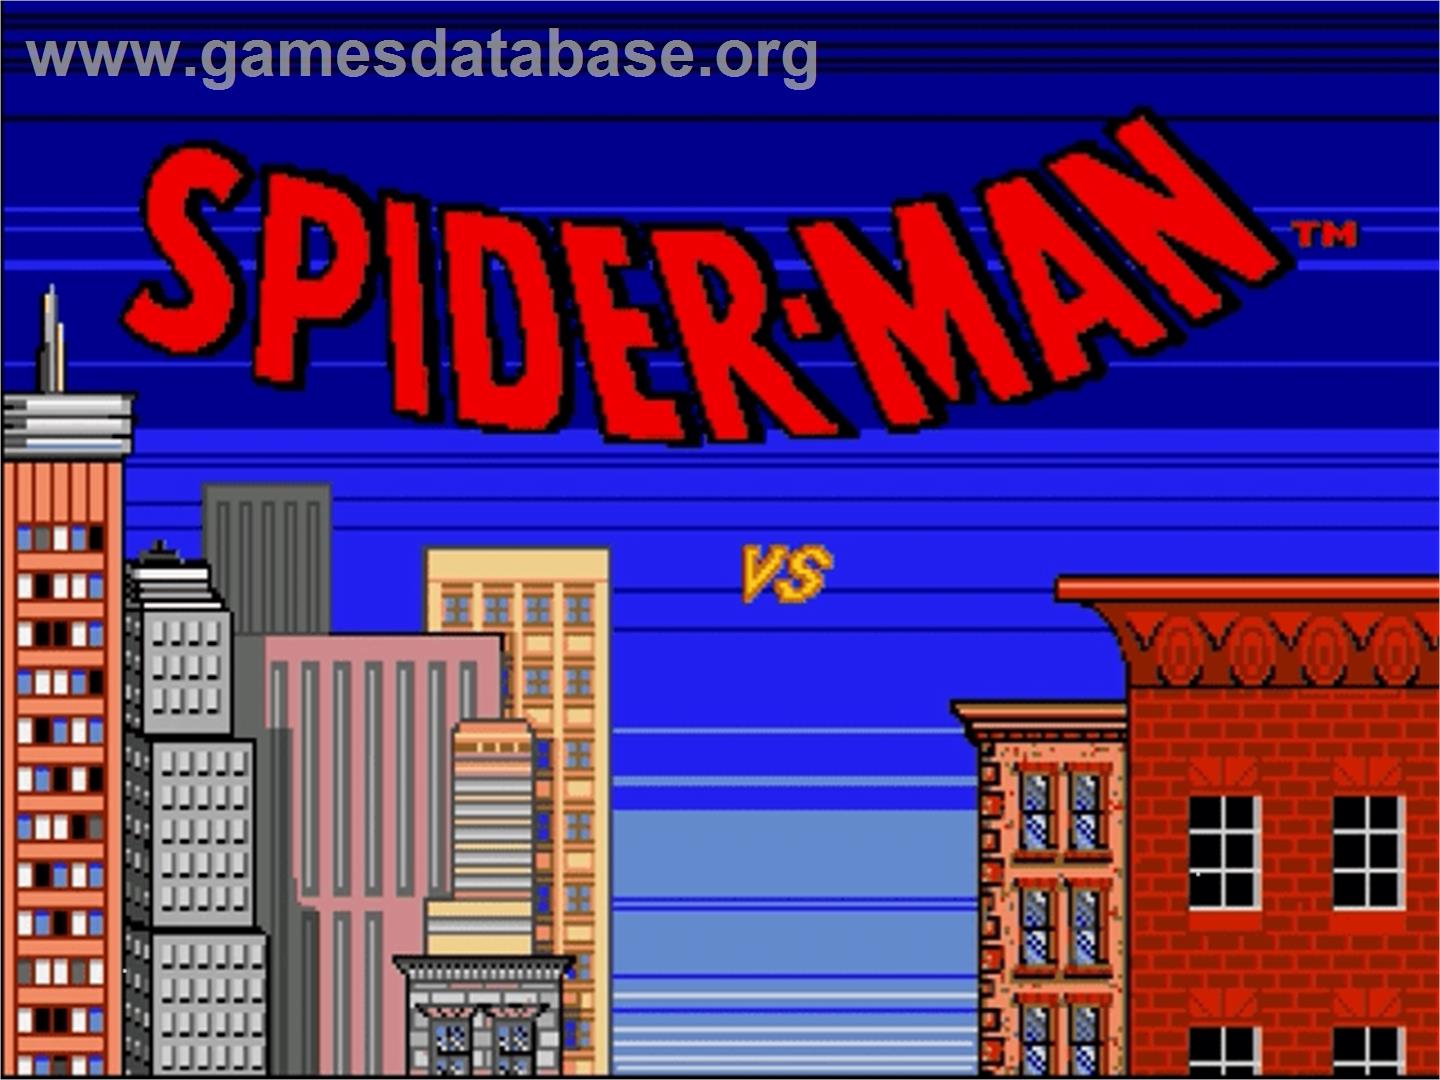 Spider-Man: The Animated Series - Sega Genesis - Artwork - Title Screen